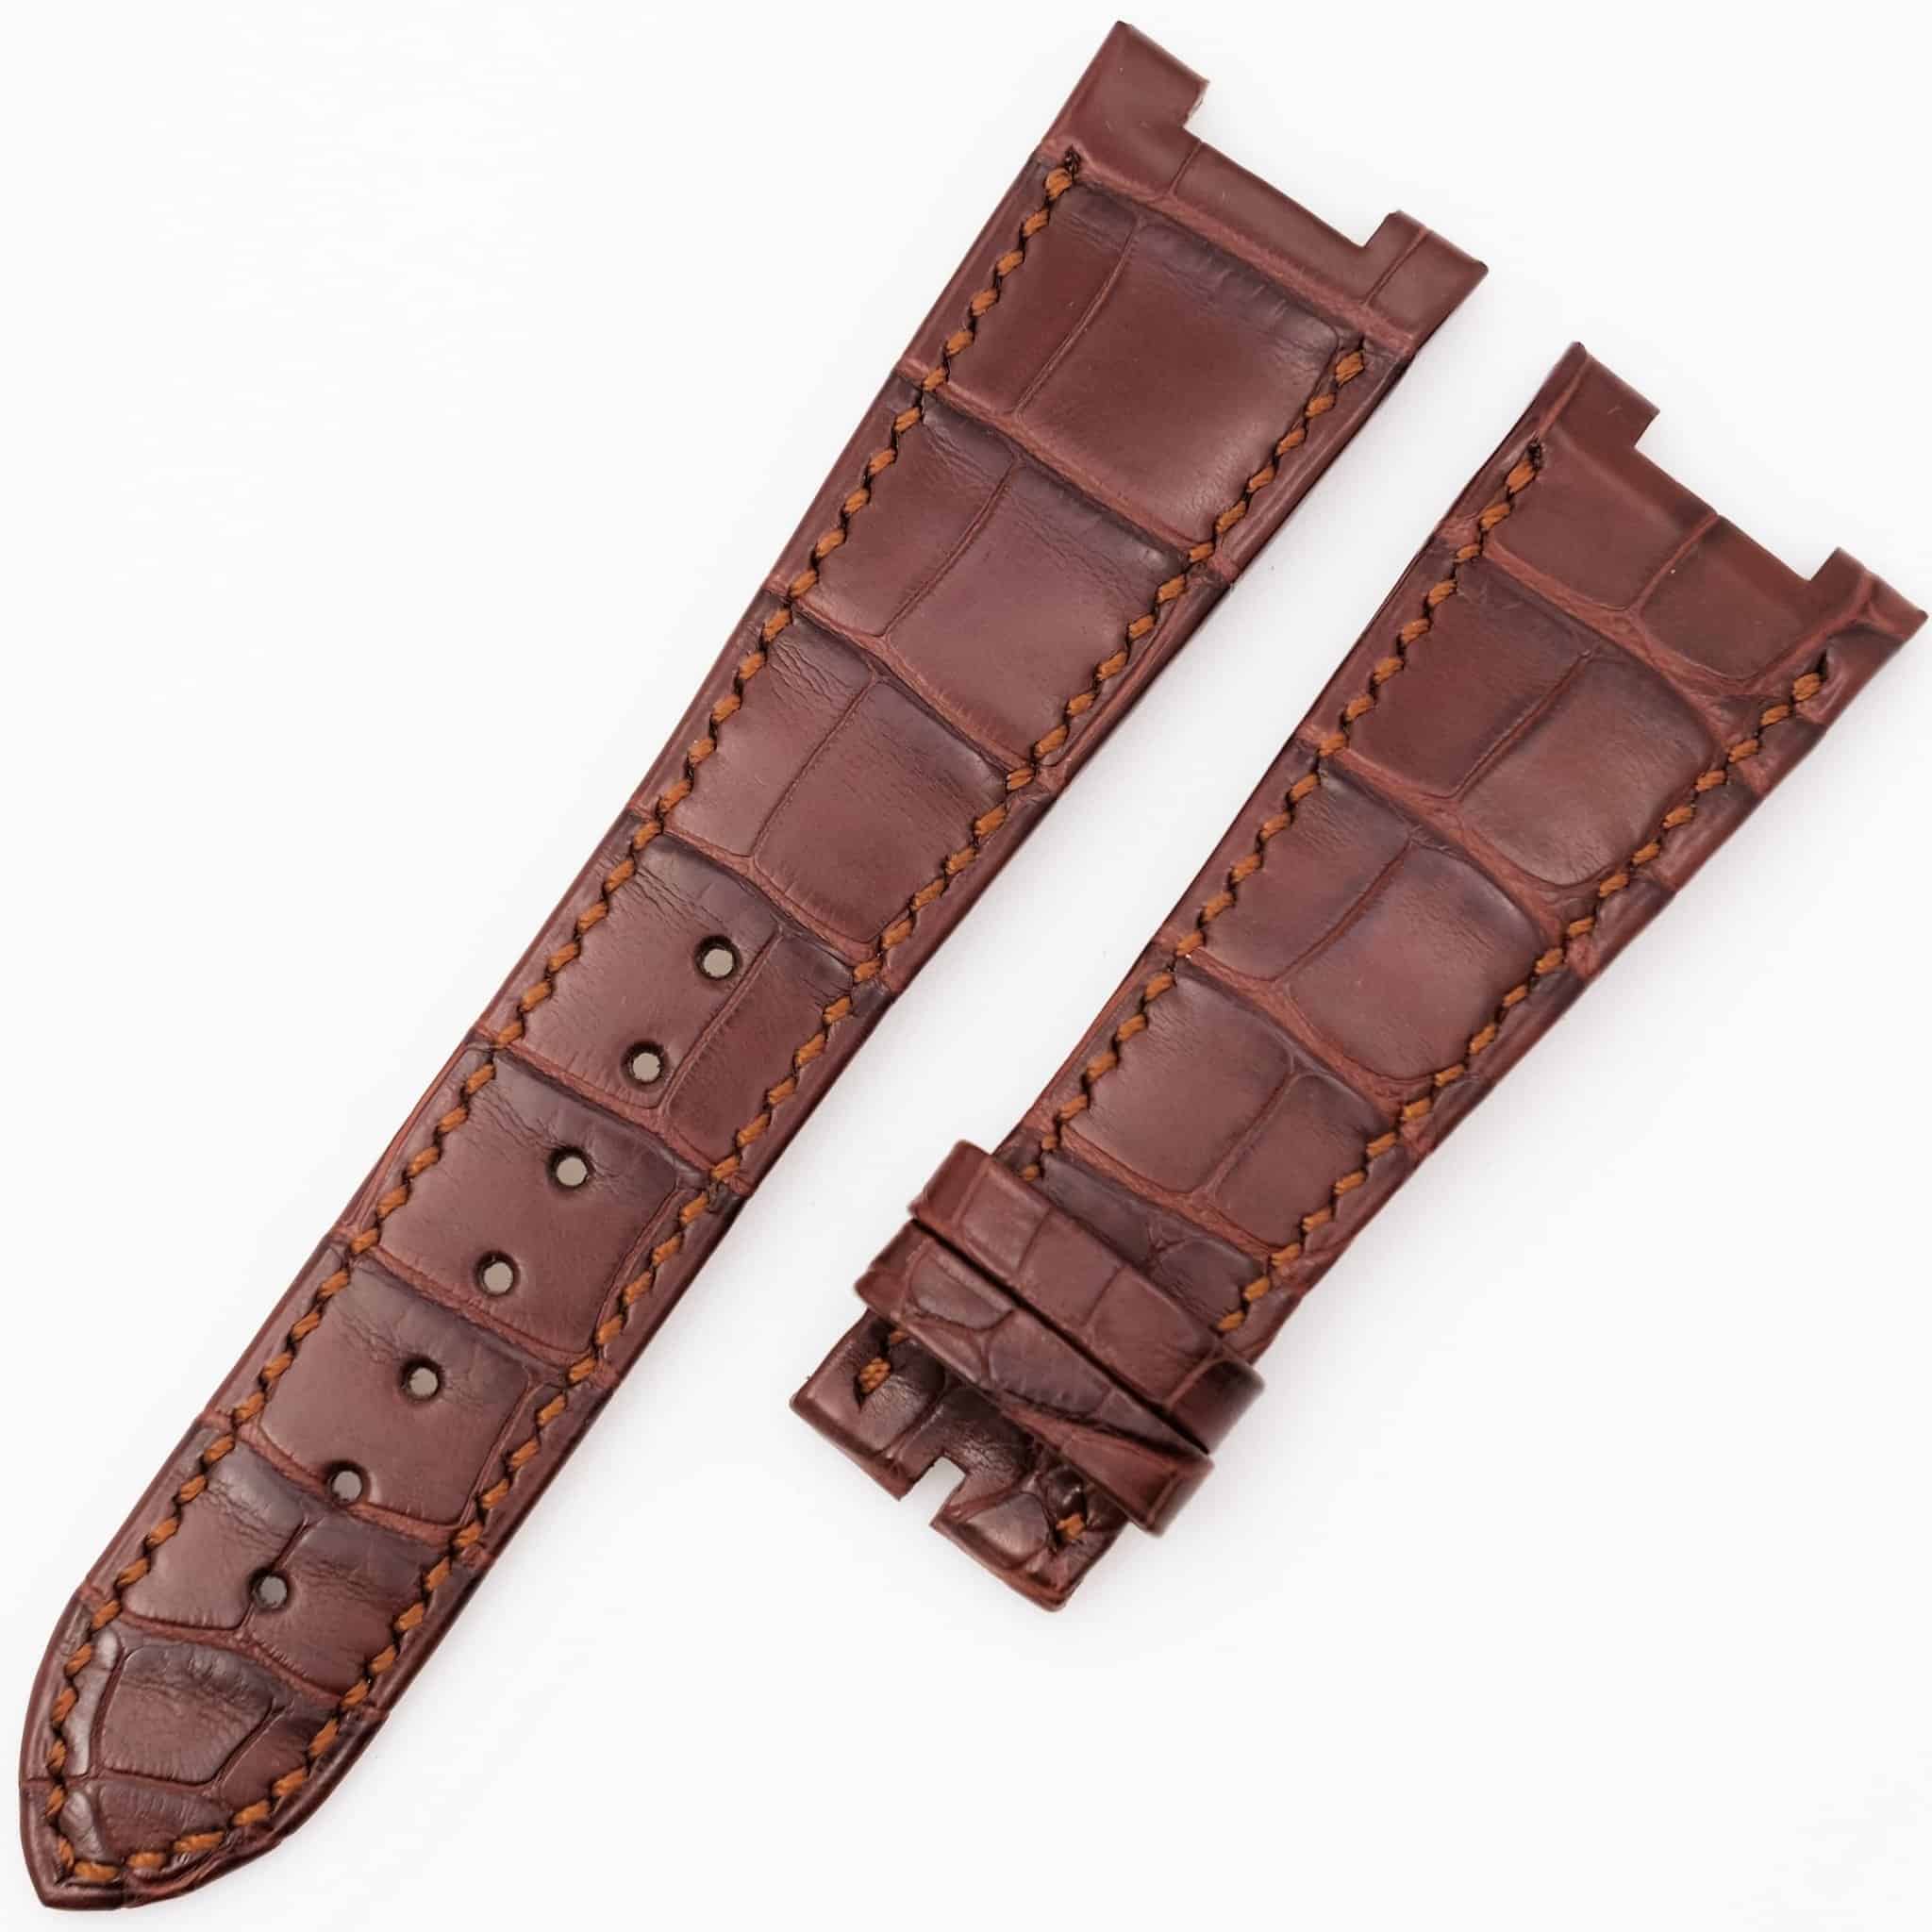 Patek Philippe Nautilus 5712 handmade brown leather strap for sale